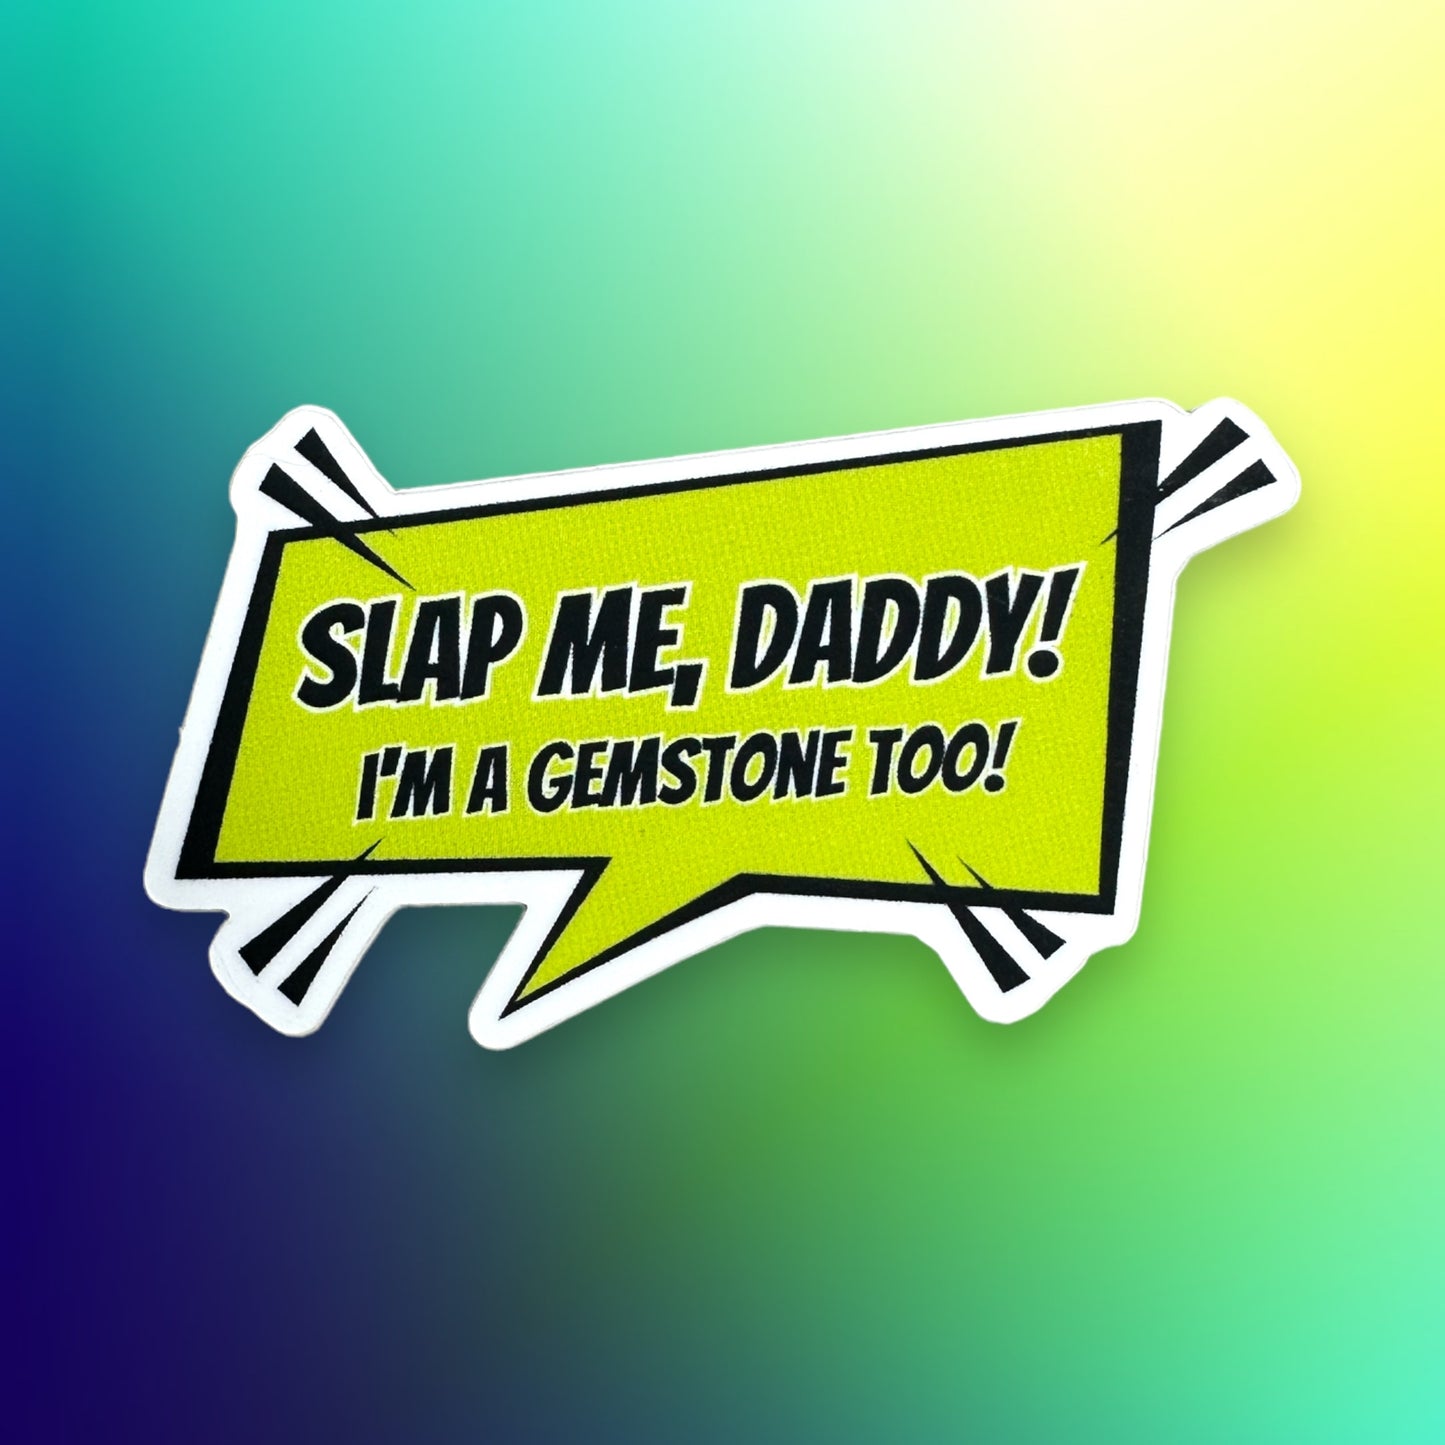 Slap me, daddy!